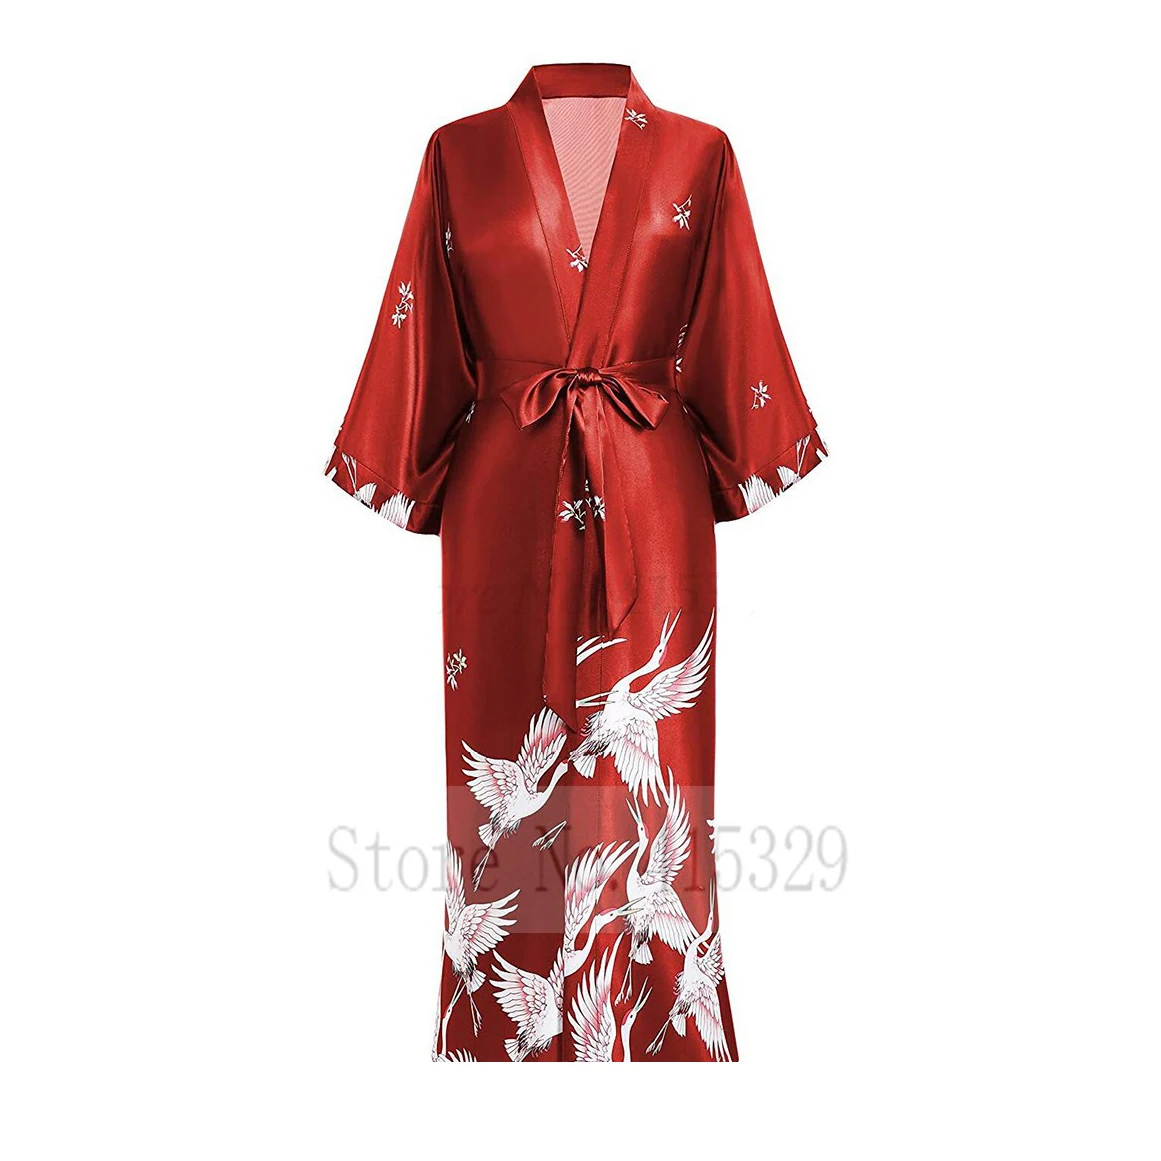 

Long Kimono Robe Wedding Party Gift Longewear Bride Bridesmaid Bathrobe Gown Women Print CRANE Nightgown Intimate Lingerie